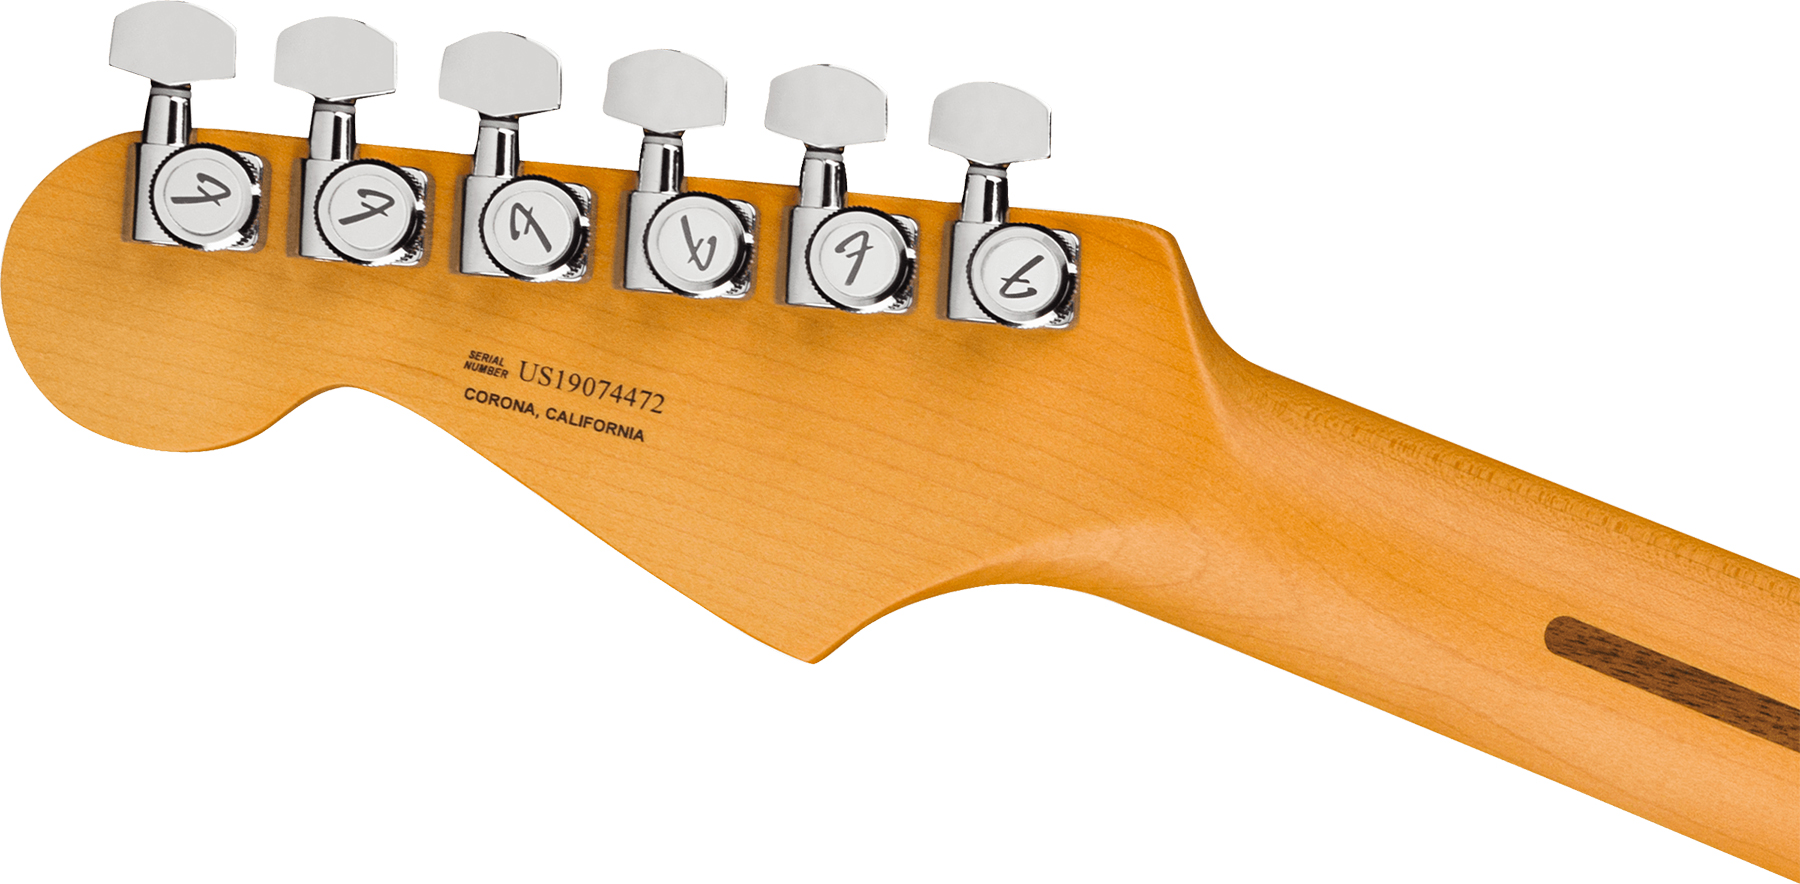 Fender Strat American Ultra 2019 Usa Mn - Mocha Burst - Str shape electric guitar - Variation 1